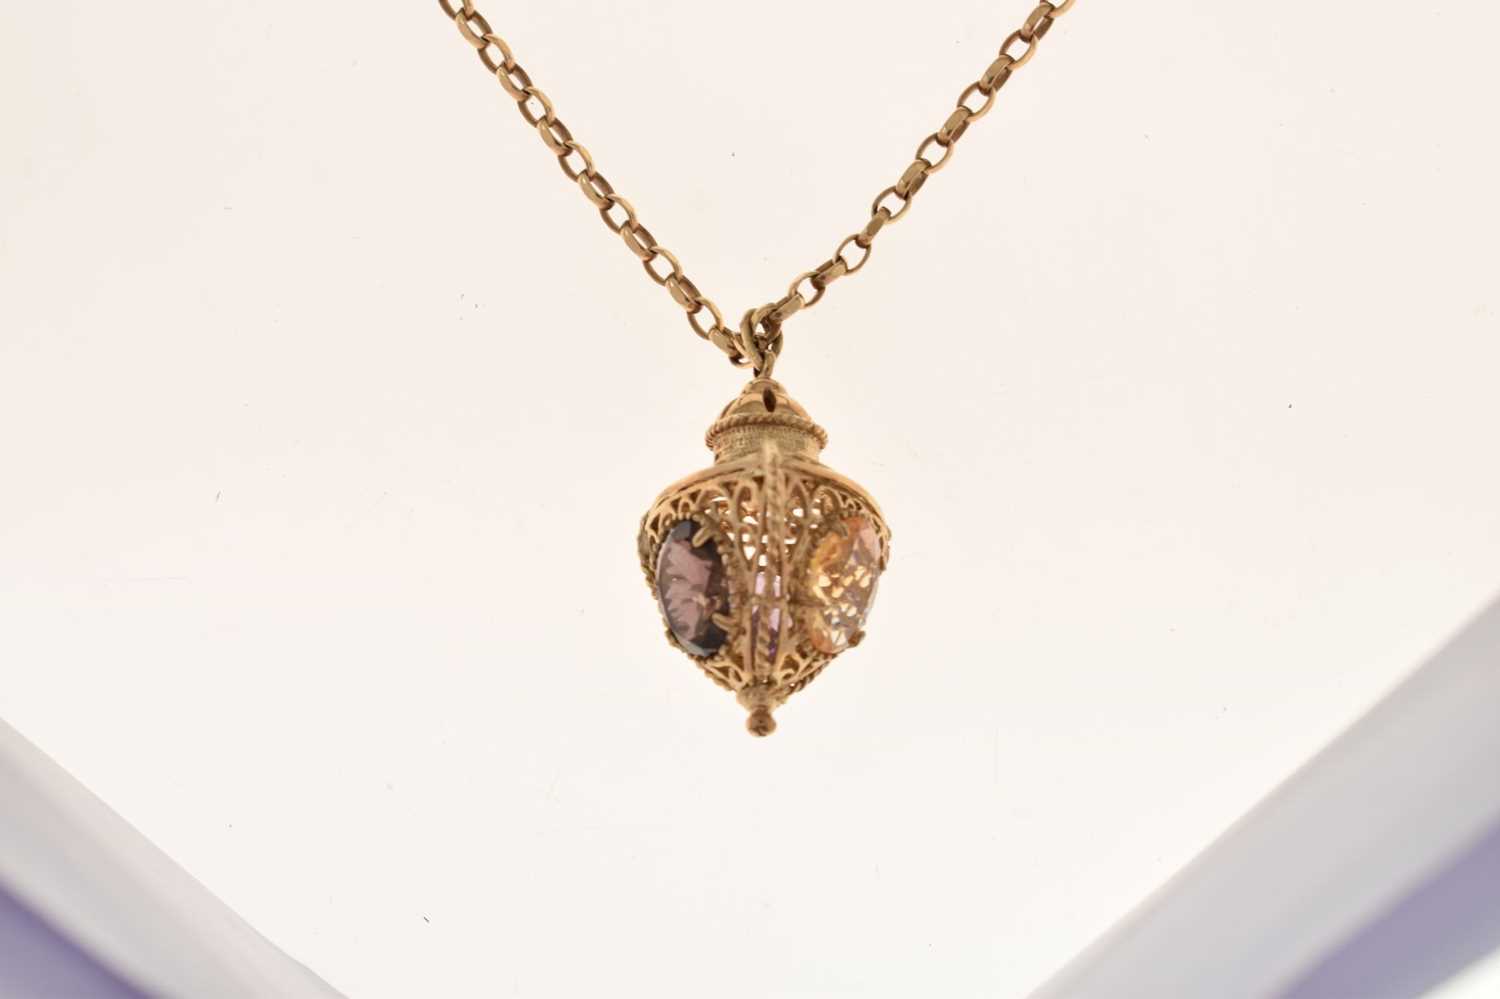 9ct gold quartz set lamp pendant on chain - Image 8 of 8